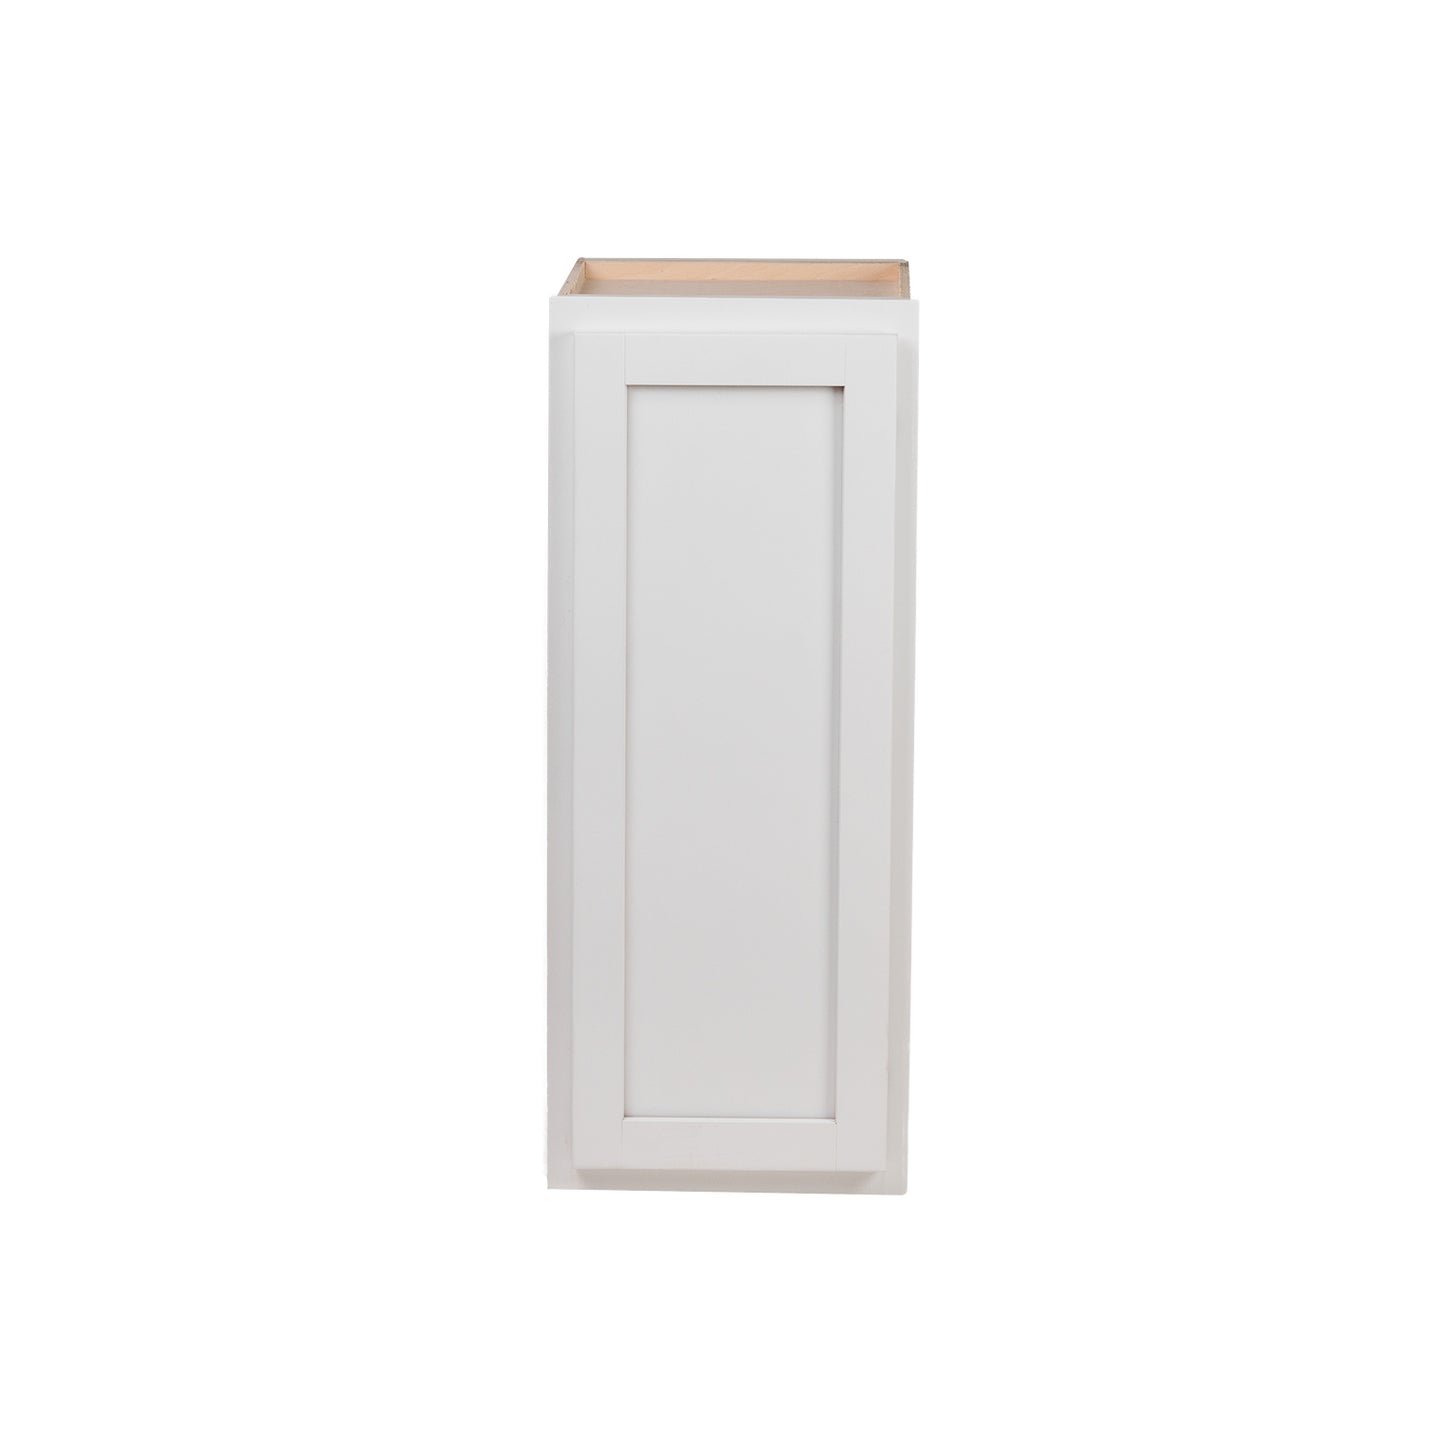 Quicklock RTA (Ready-to-Assemble) Pure White 24"Wx30"Hx12"D Wall Cabinet